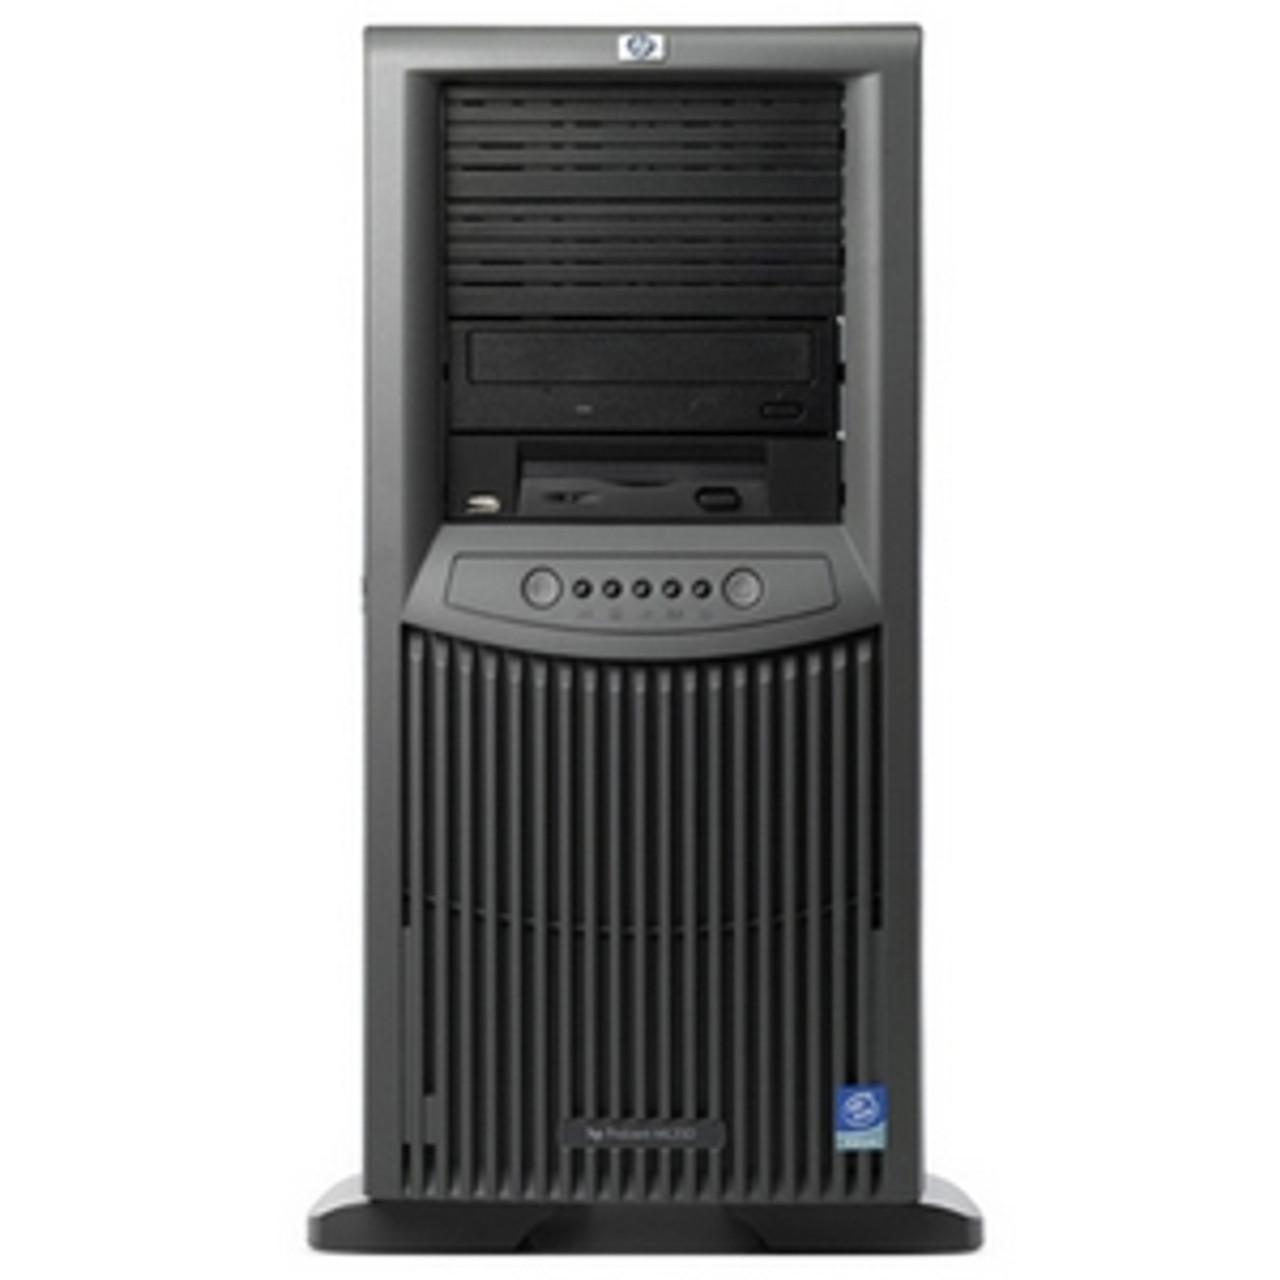 375638-001 - HP ProLiant ML350 G4 Network Storage Server 1 x Intel Xeon 3.2GHz 1.2TB SCSI